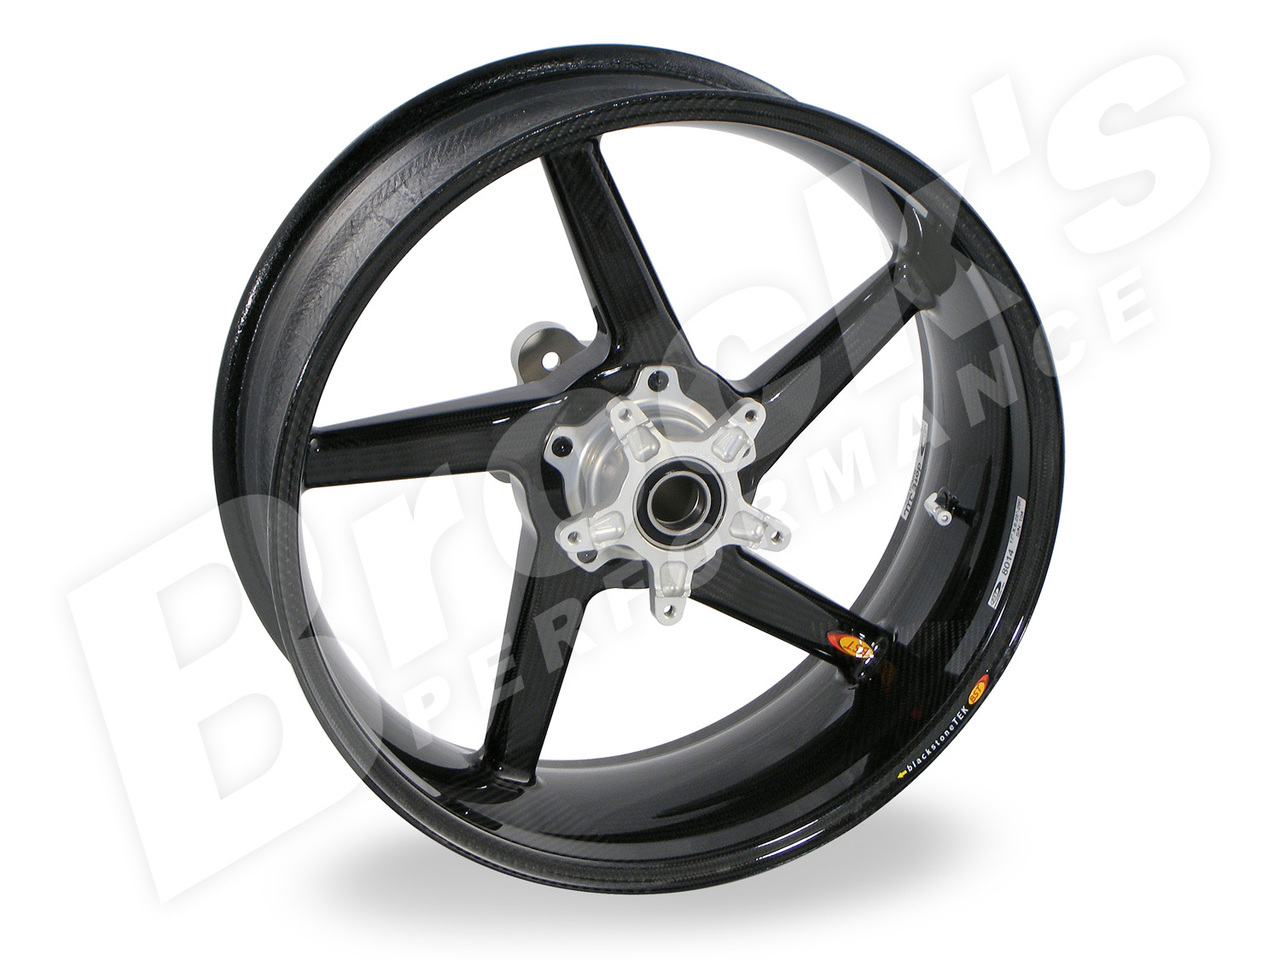 BST Diamond TEK 17 x 5.5 Rear Wheel - Kawasaki ZX-6R/636R (05-22 